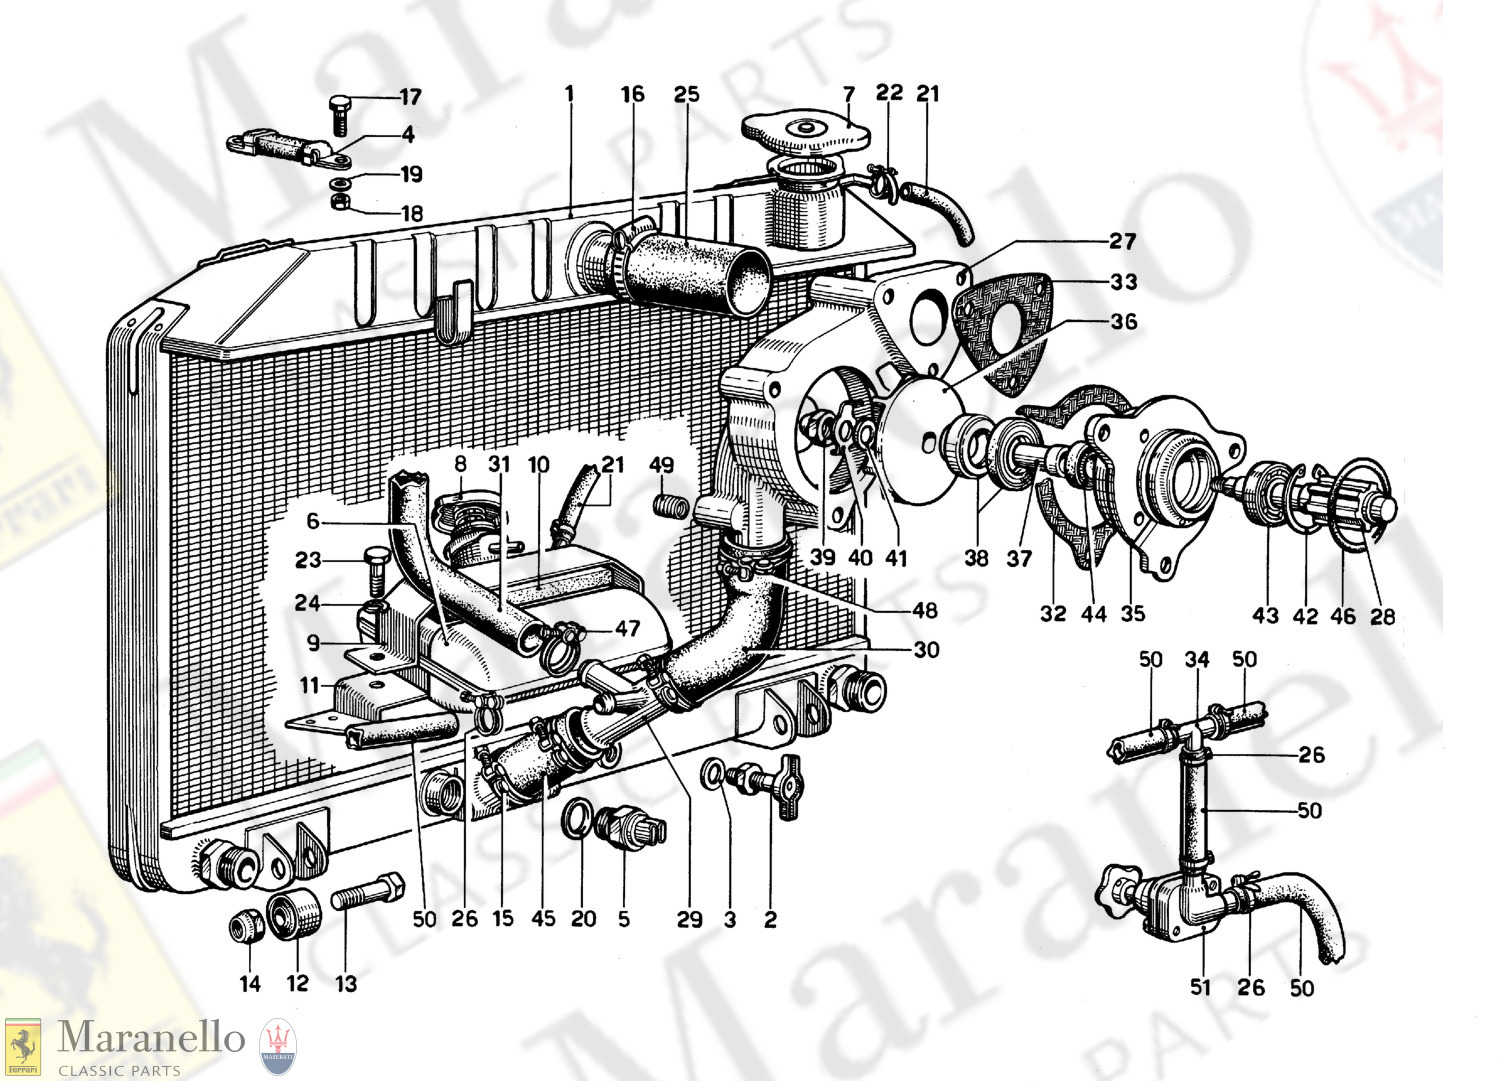 041 - Radiator & Water Pump